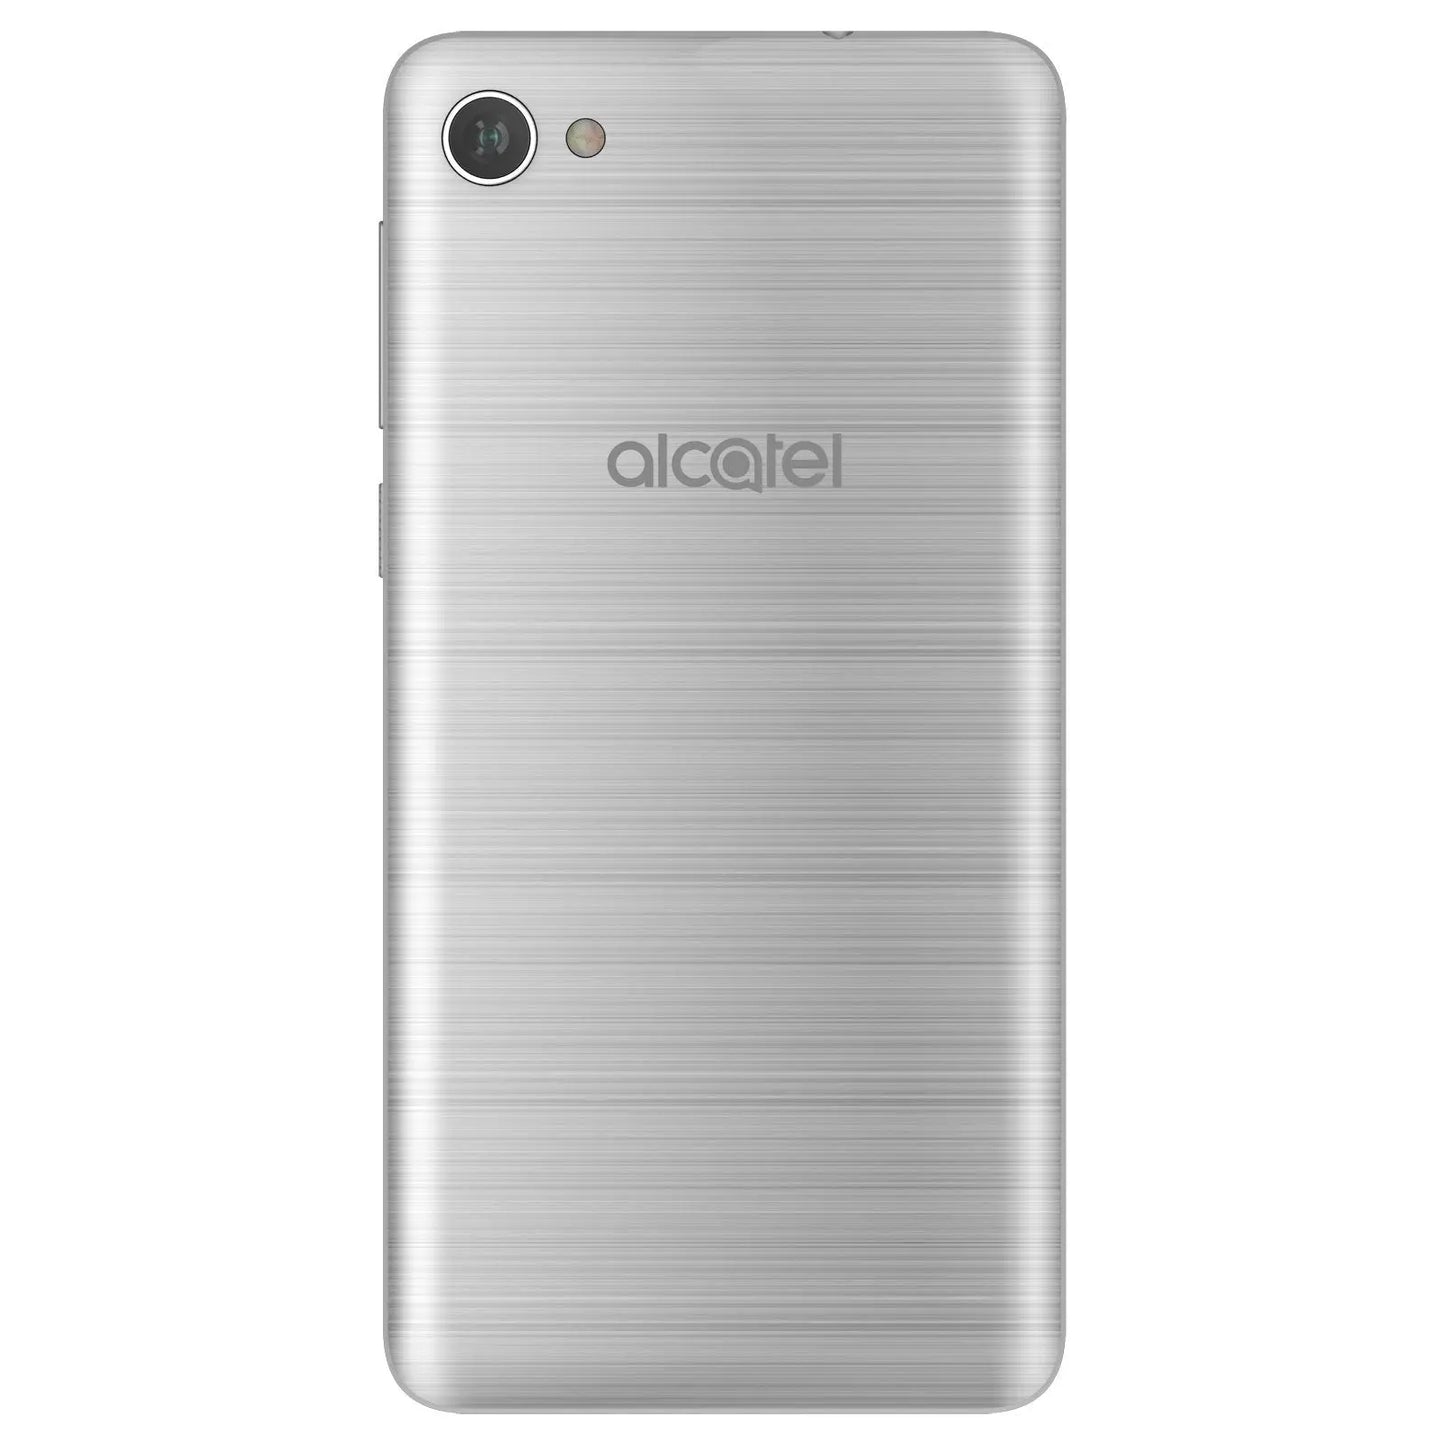 Alcatel A5 LED Argent Alcatel